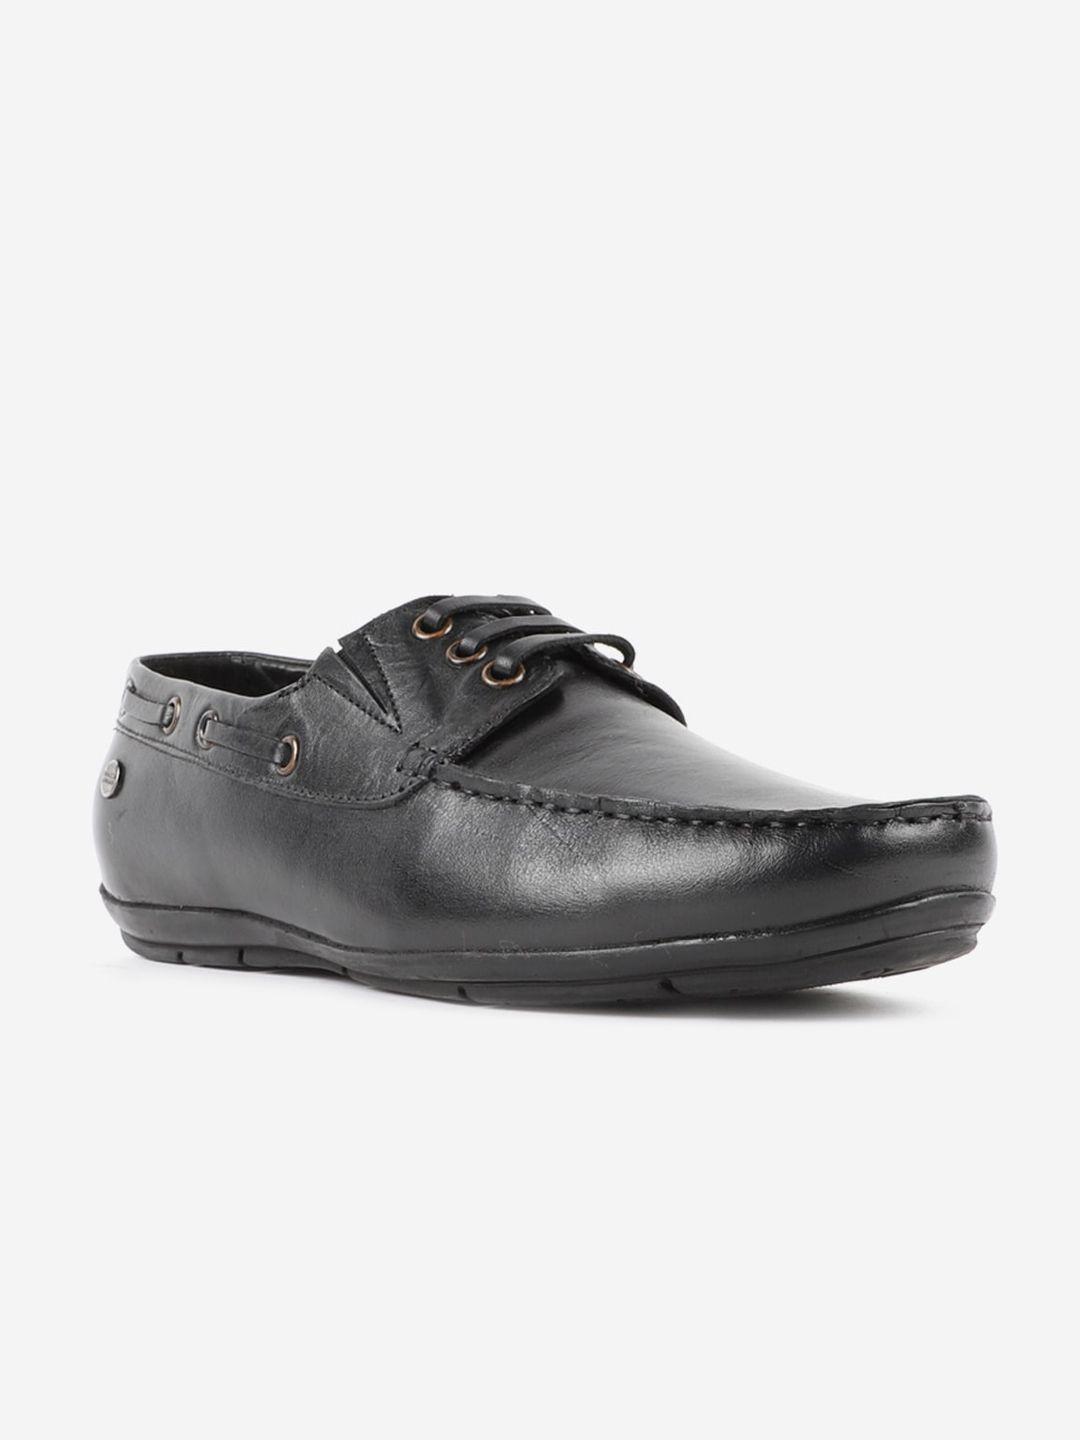 carlton-london-men-black-boat-shoes